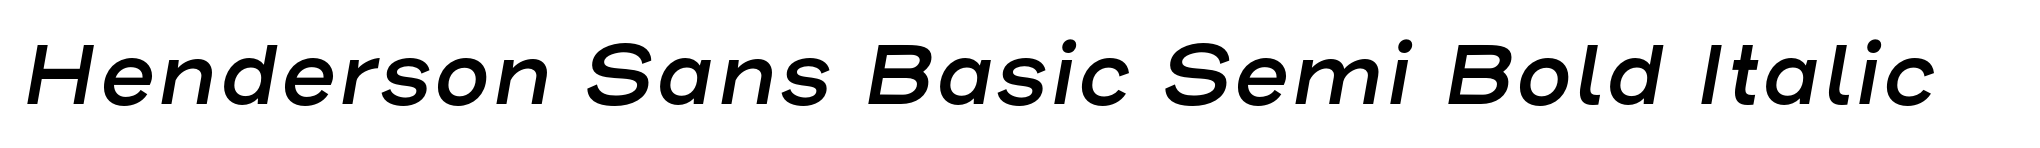 Henderson Sans Basic Semi Bold Italic image